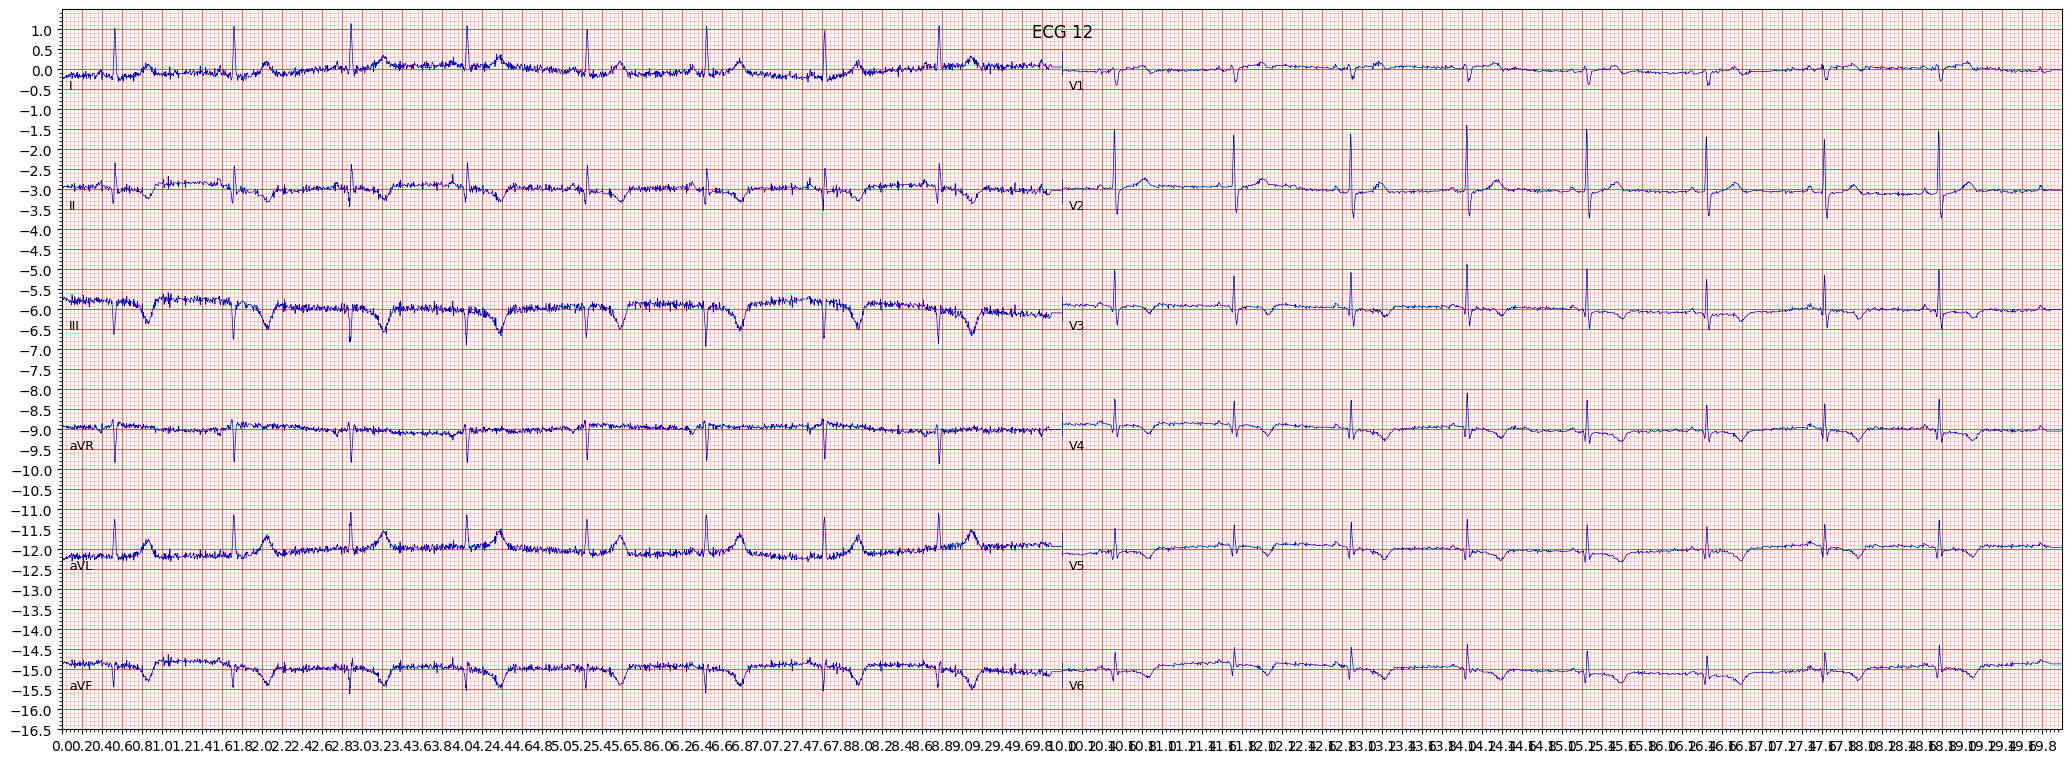 inferolateral myocardial infarction (ILMI) example 3219